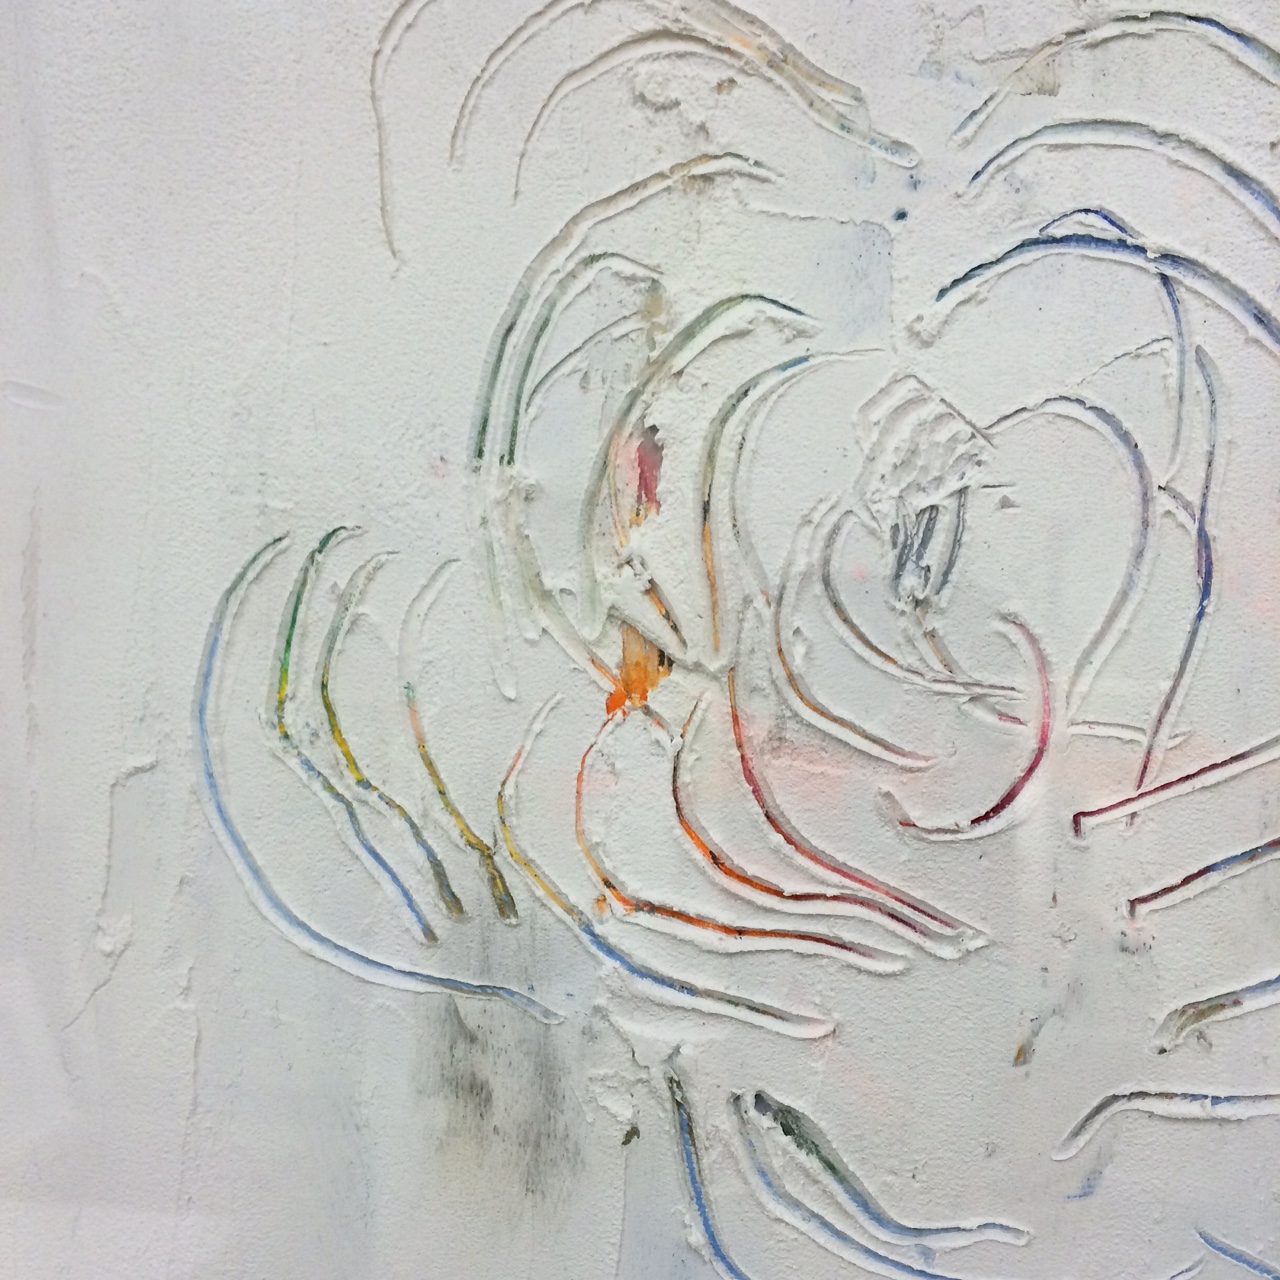   Rose, Detail   Oil on board  12" x 12"  2015 